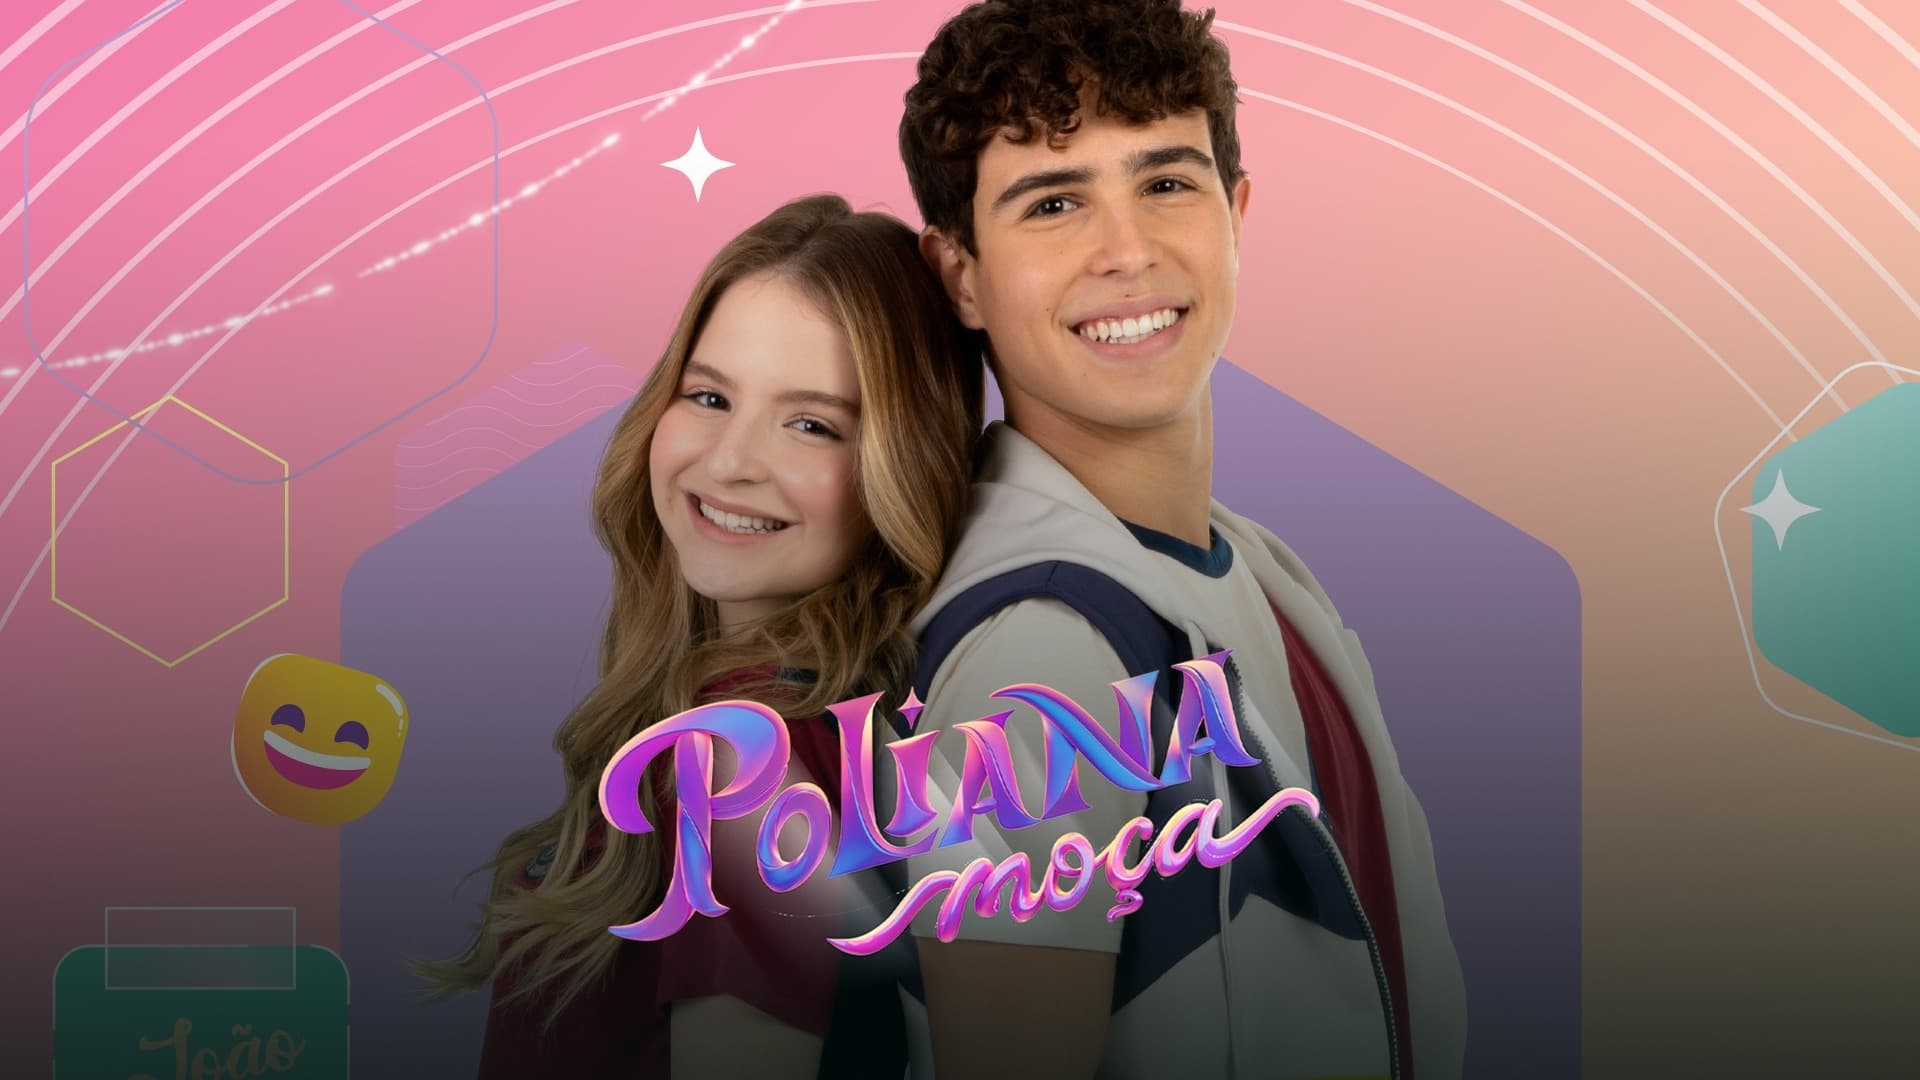 Poliana Moça - Season 1 Episode 224 : Episode 224